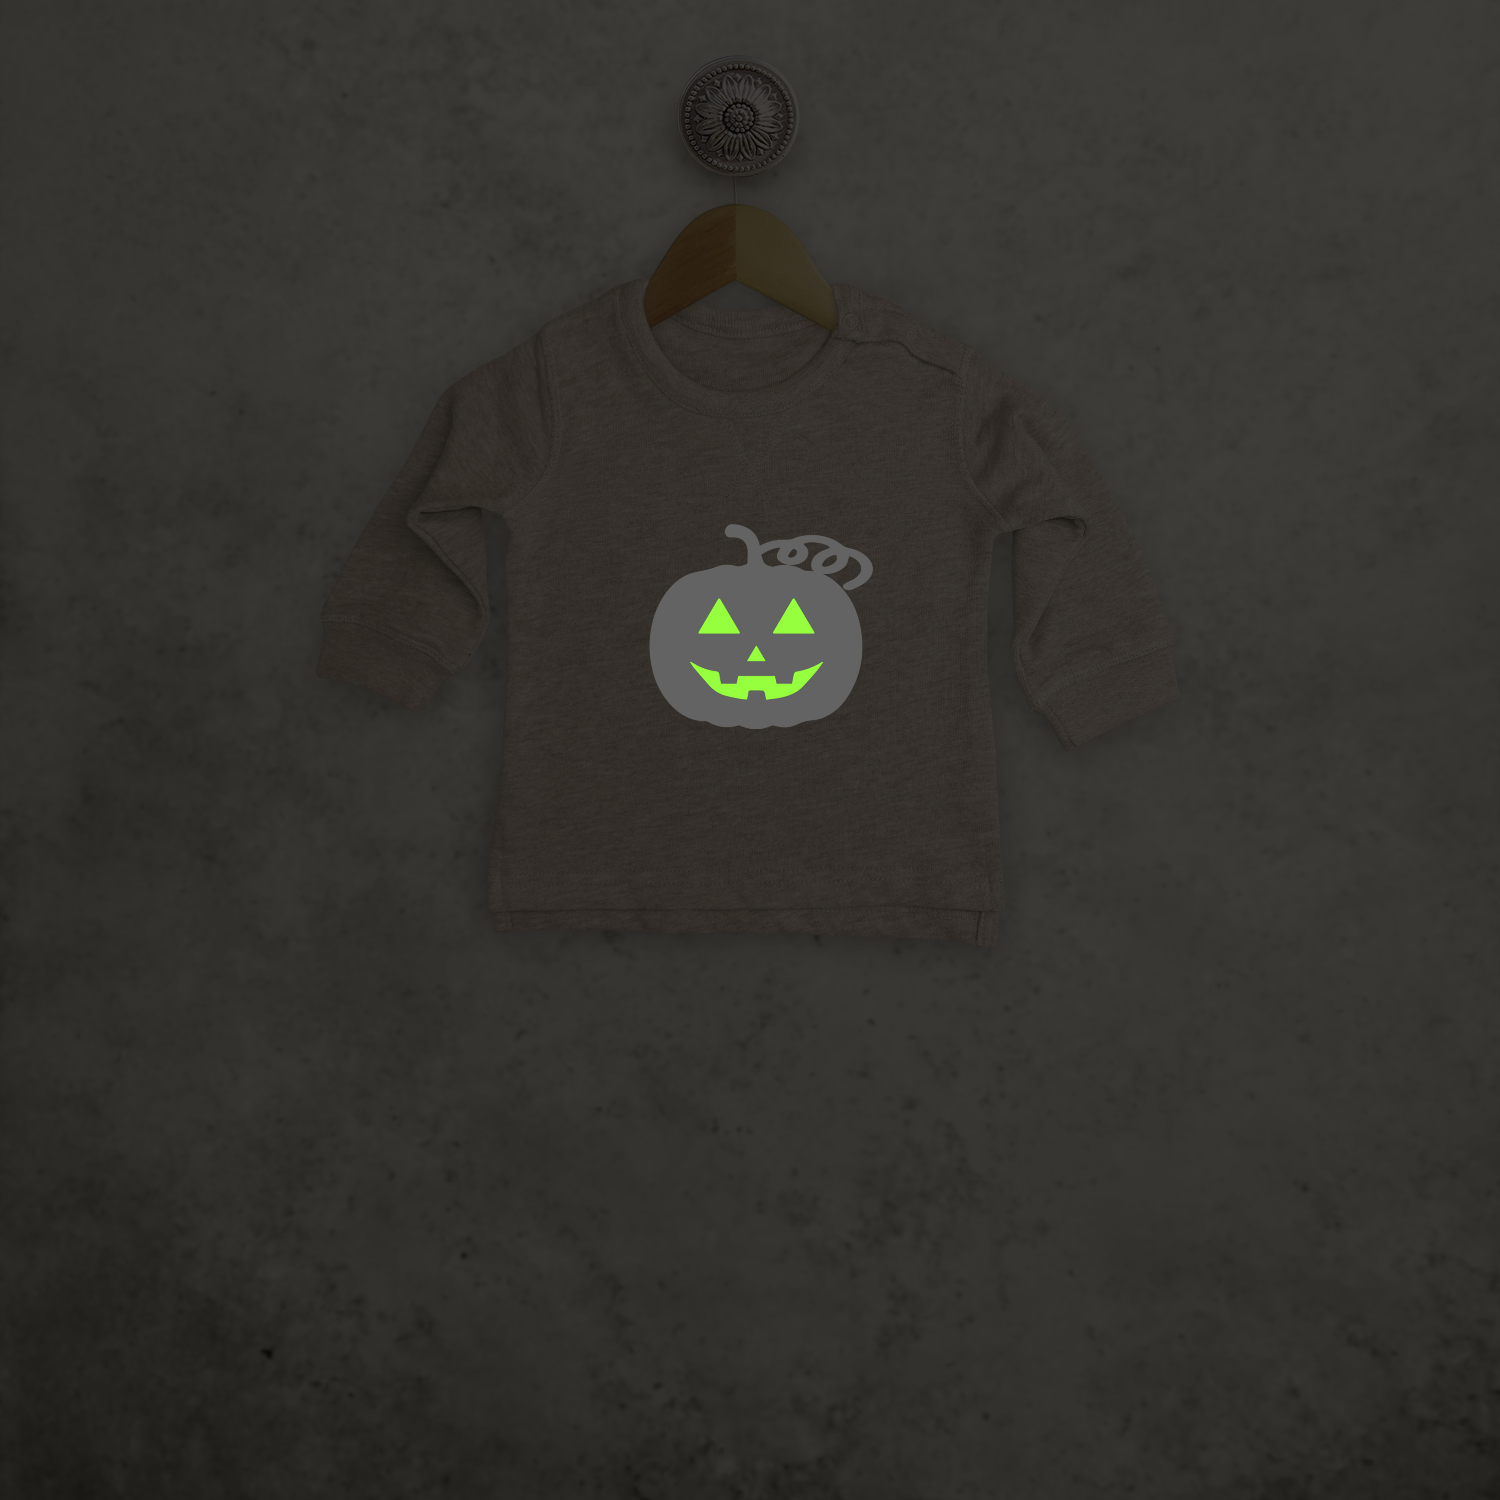 Pumpkin glow in the dark baby sweater